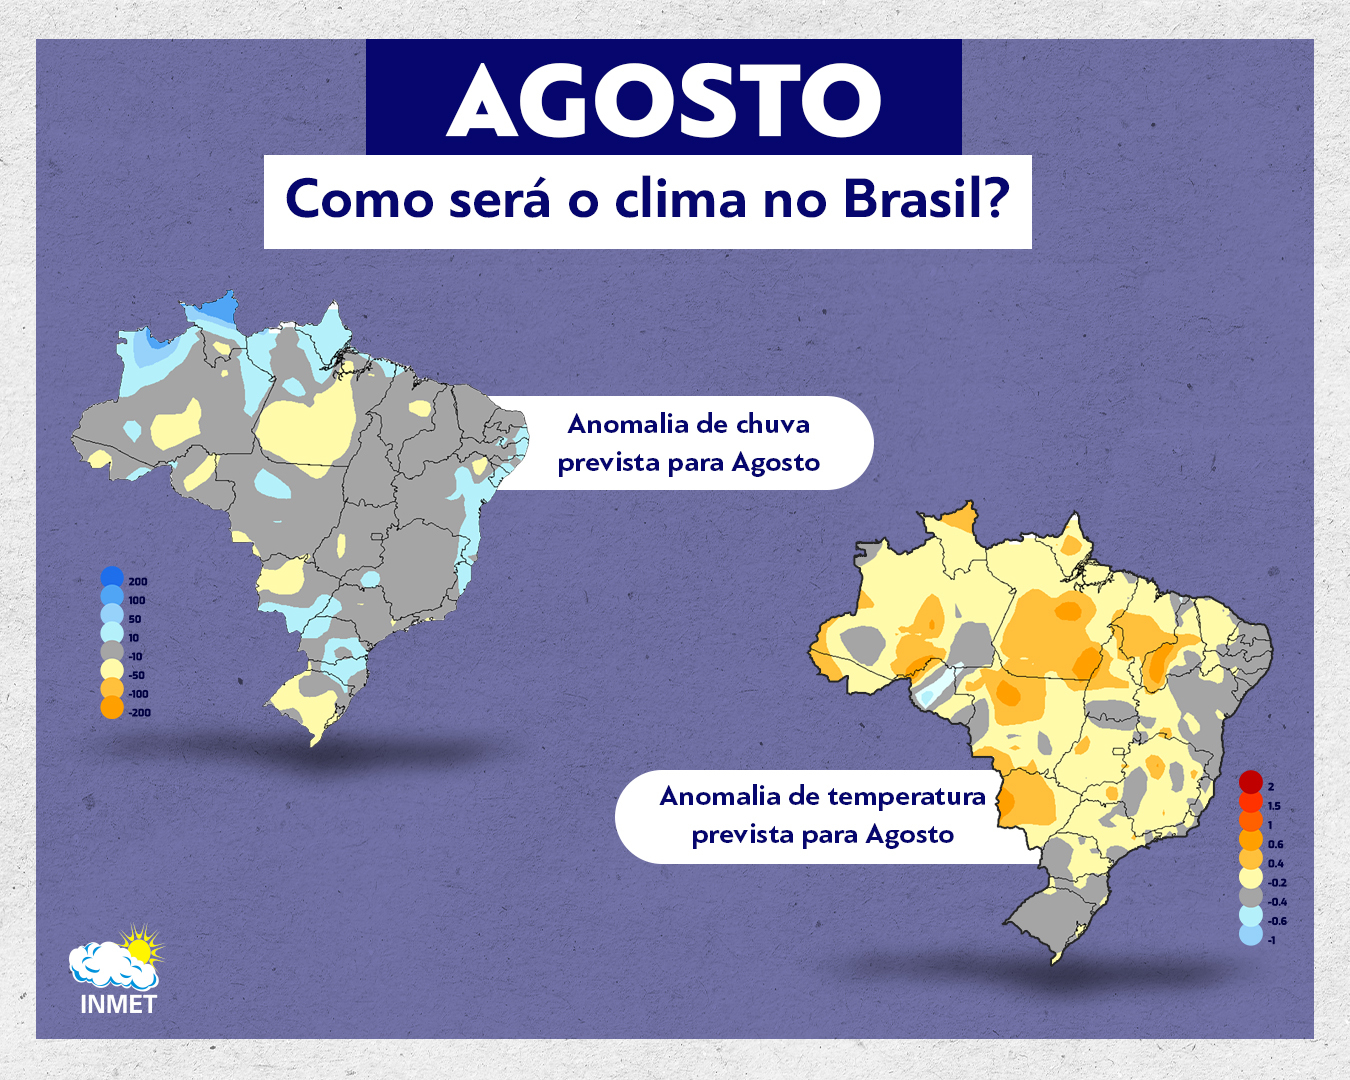 Agosto: como será o clima no Brasil?